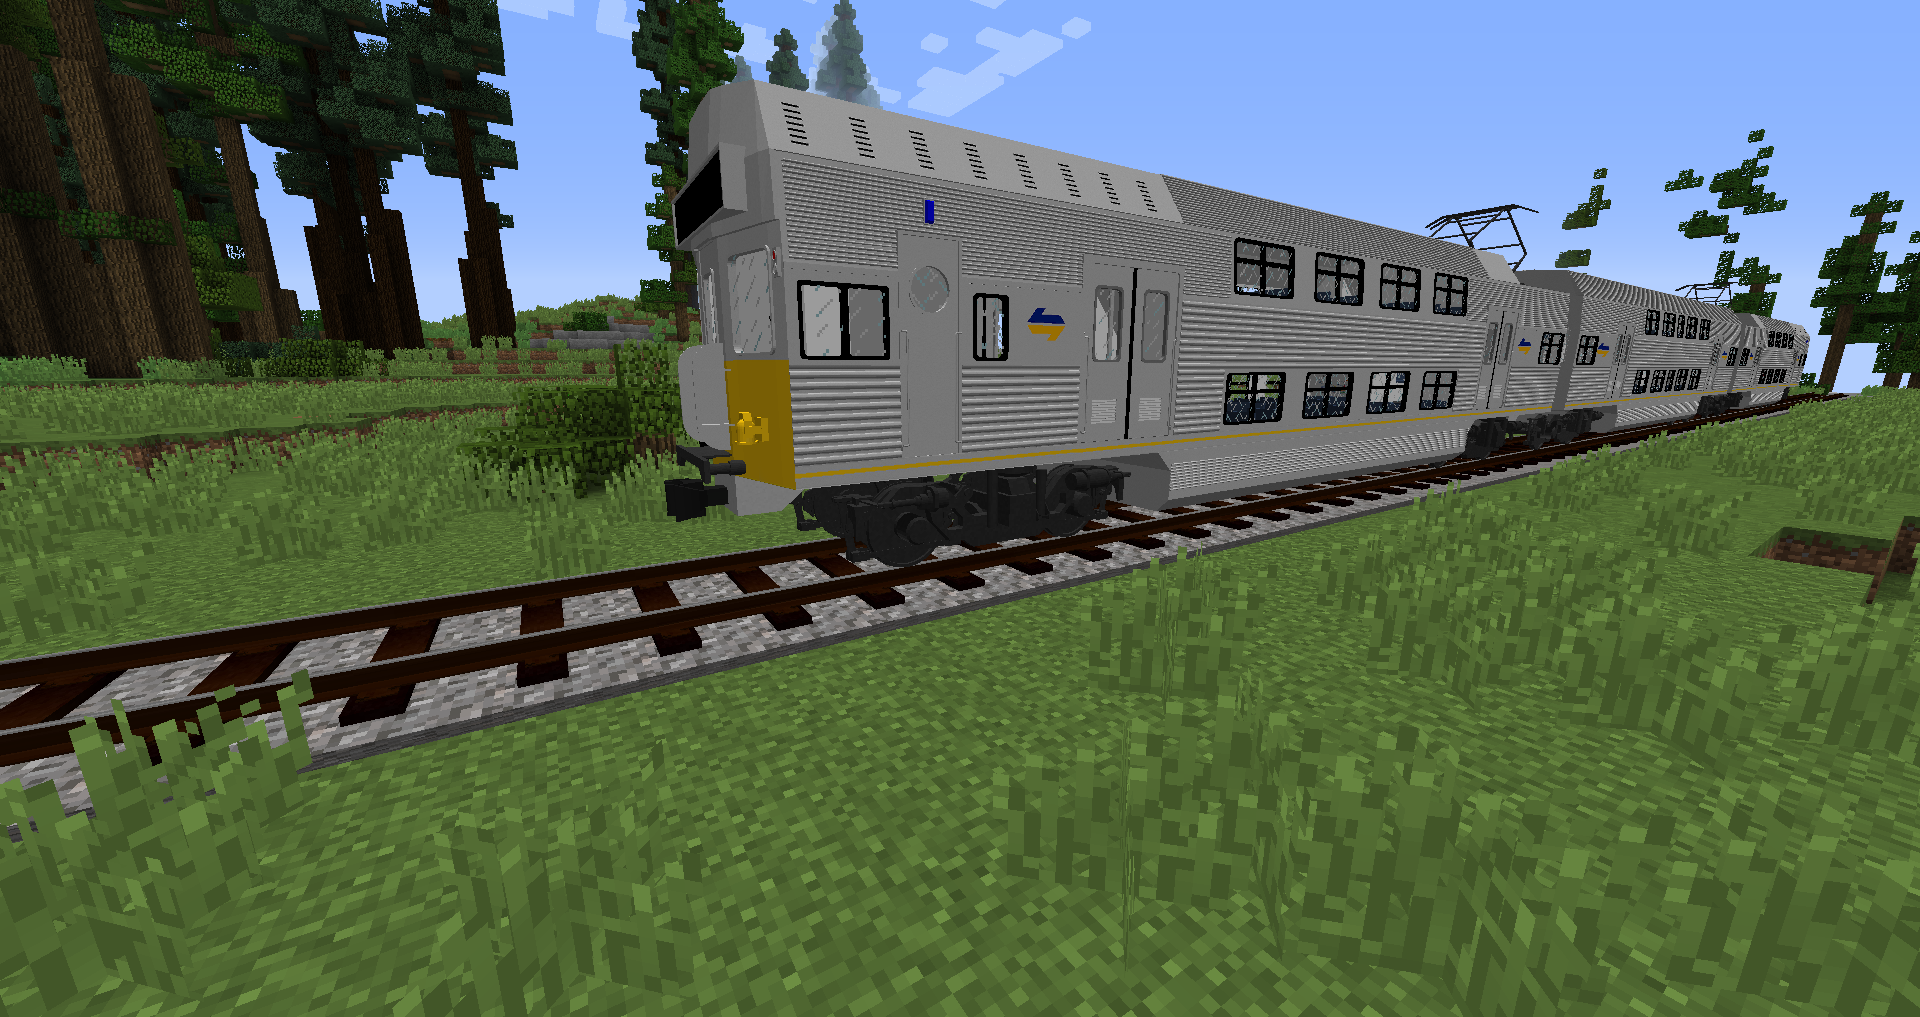 Trains mod 1.12 2. Immersive railroading 1.12.2 поезда. Immersive railroading 1.12.2 РЖД паки. Traincraft 1.12.2. Электровоз Traincraft.